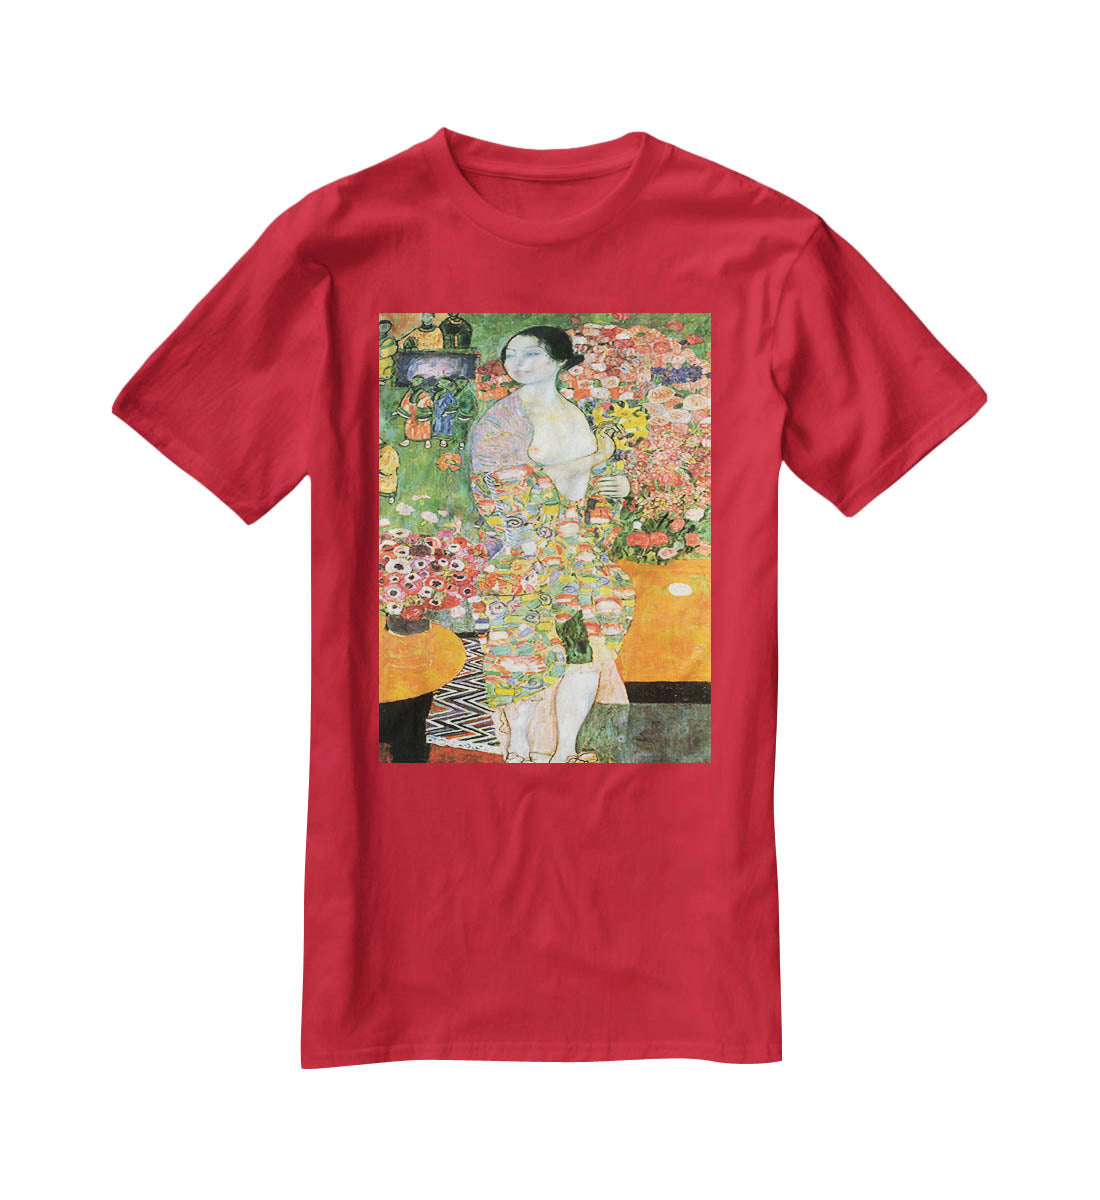 The dancer by Klimt T-Shirt - Canvas Art Rocks - 4